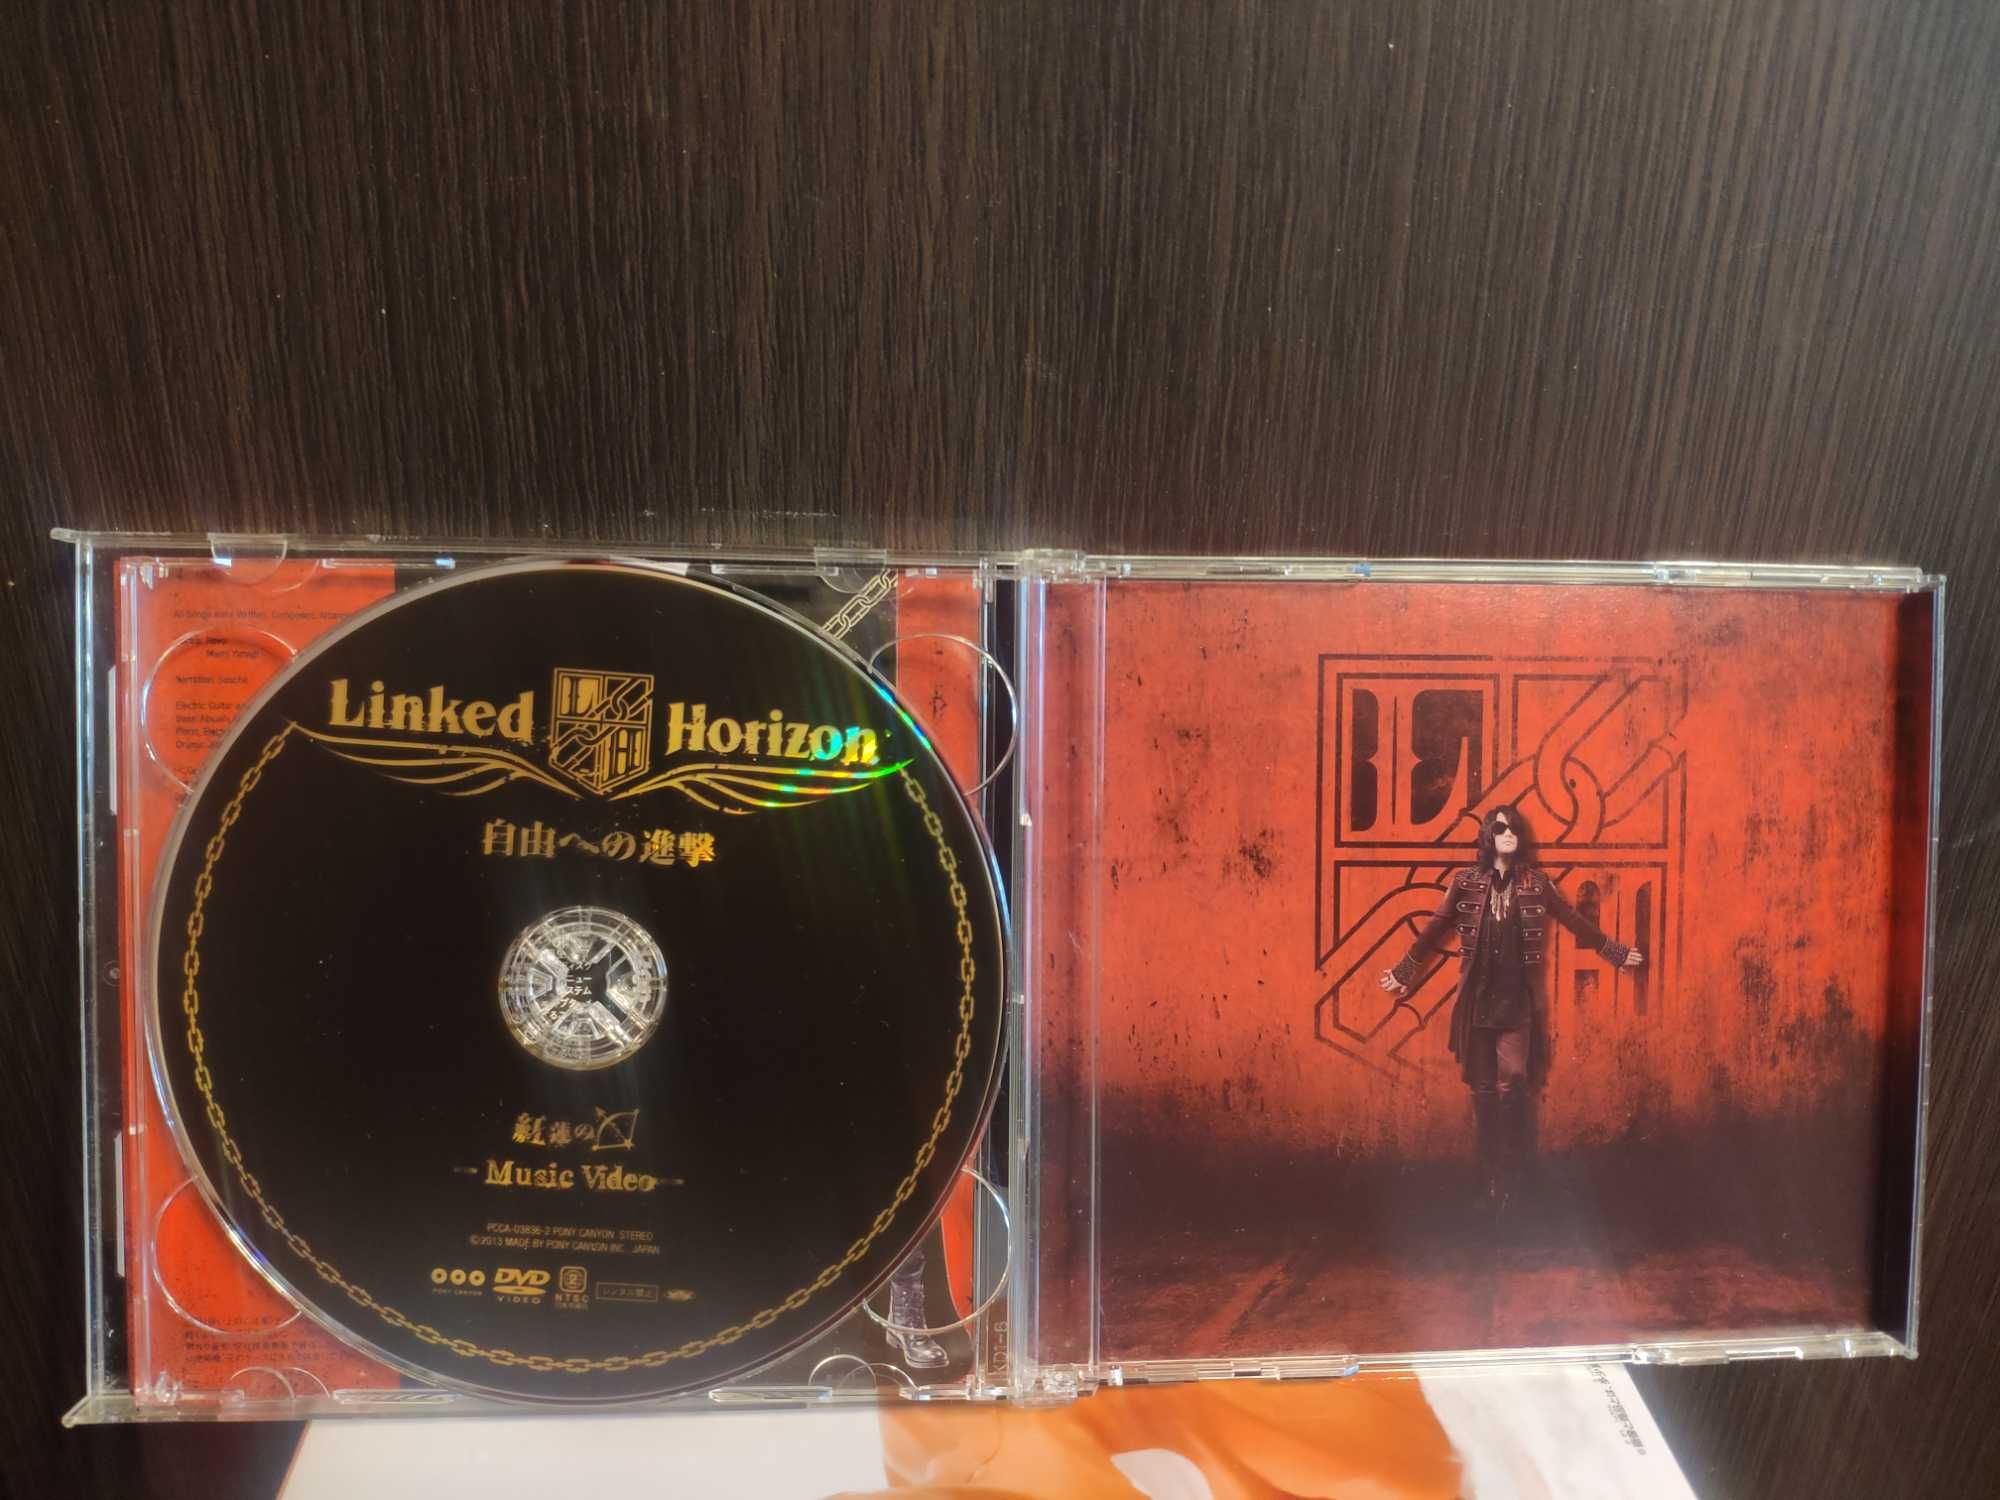 Album Attack on Titan - Linked Horizon - Guren no Yumiya Limited ed.